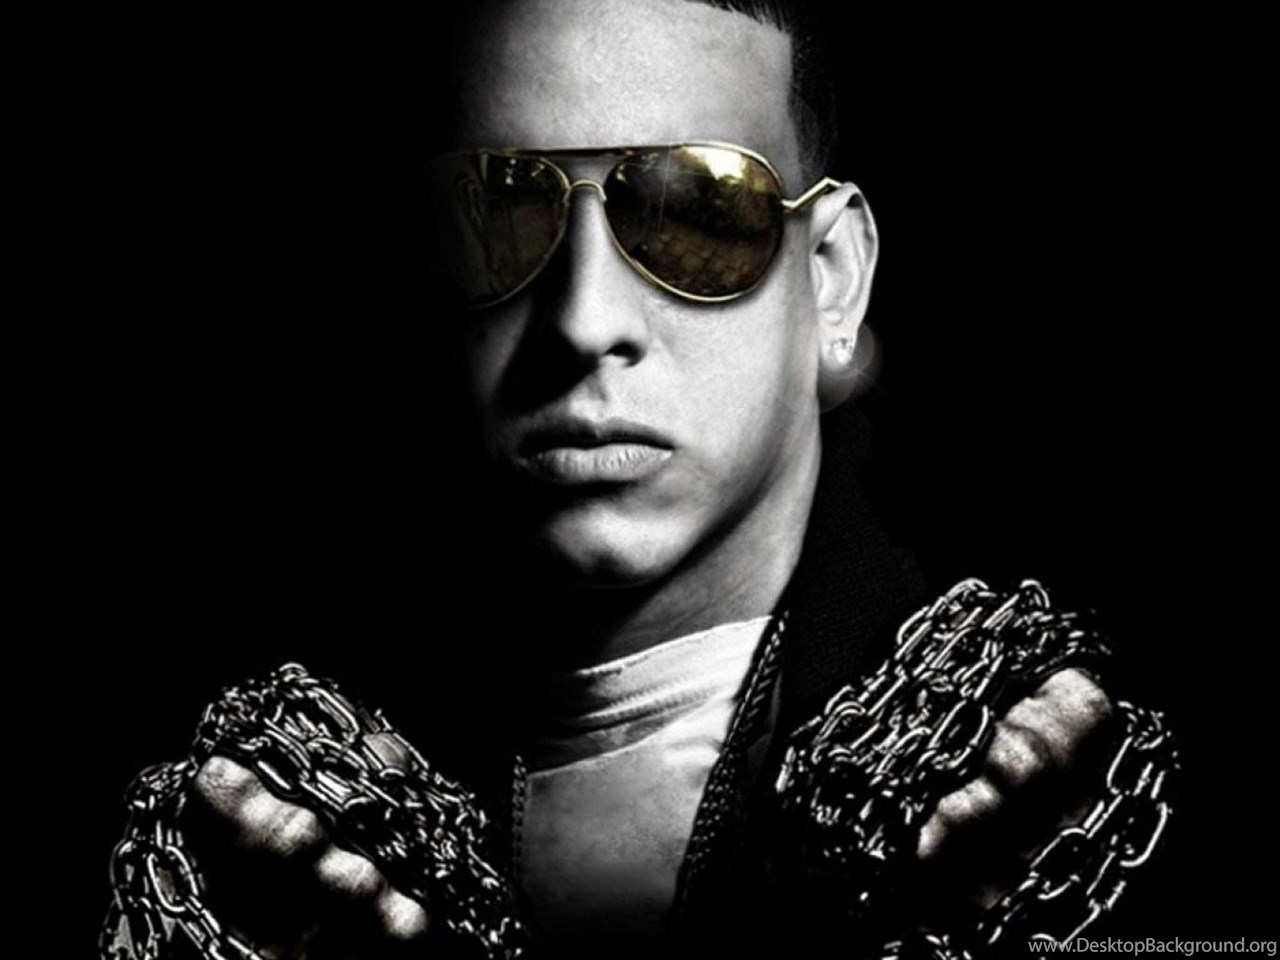 Download daddy. Daddy Yankee. Daddy Yankee фото. Daddy Yankee 2022. Daddy Yankee New album.